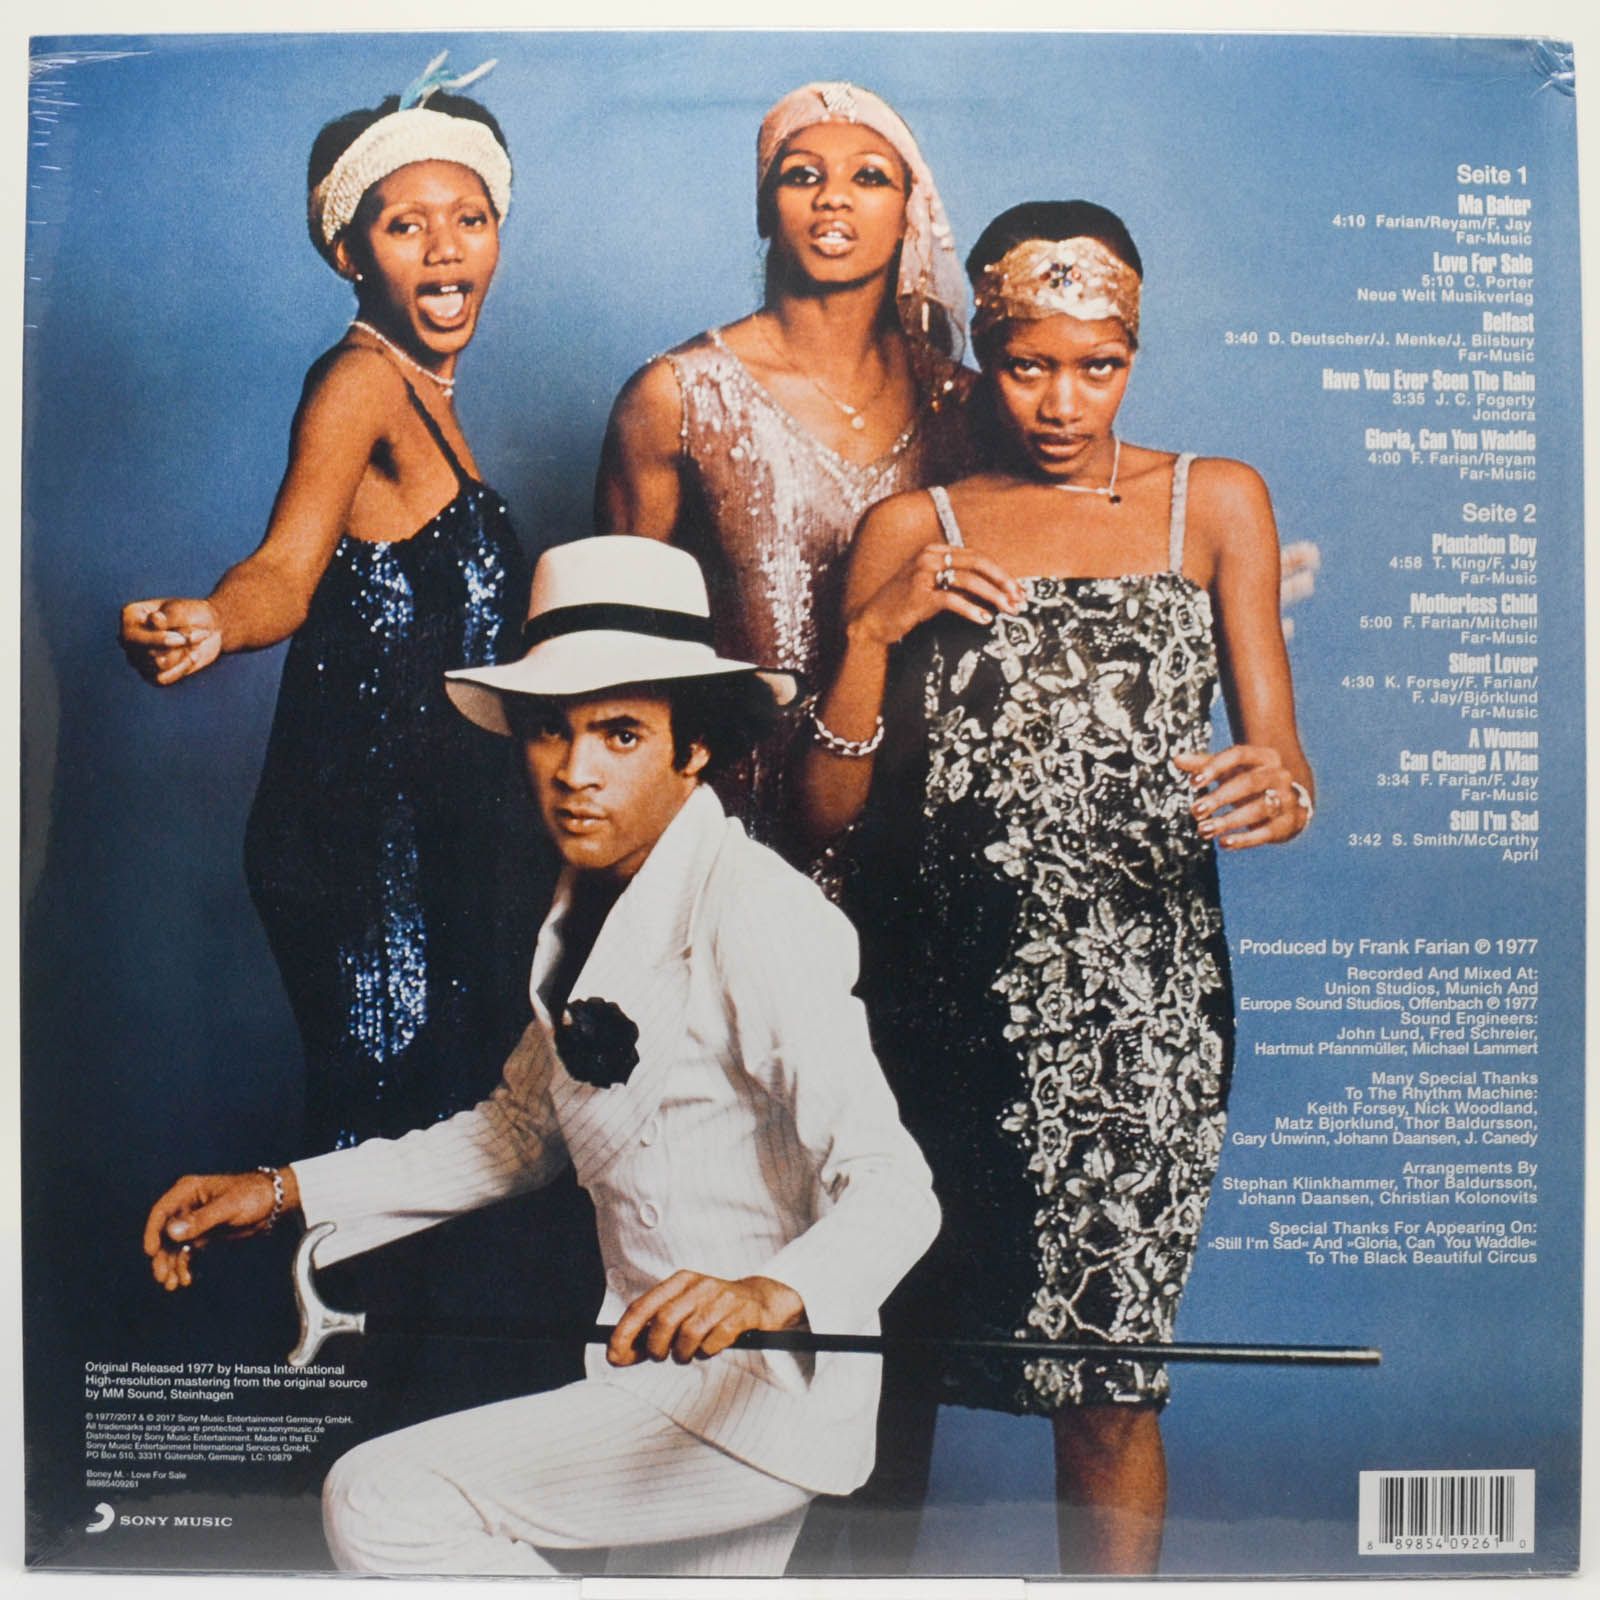 Boney M. — Love For Sale, 1977